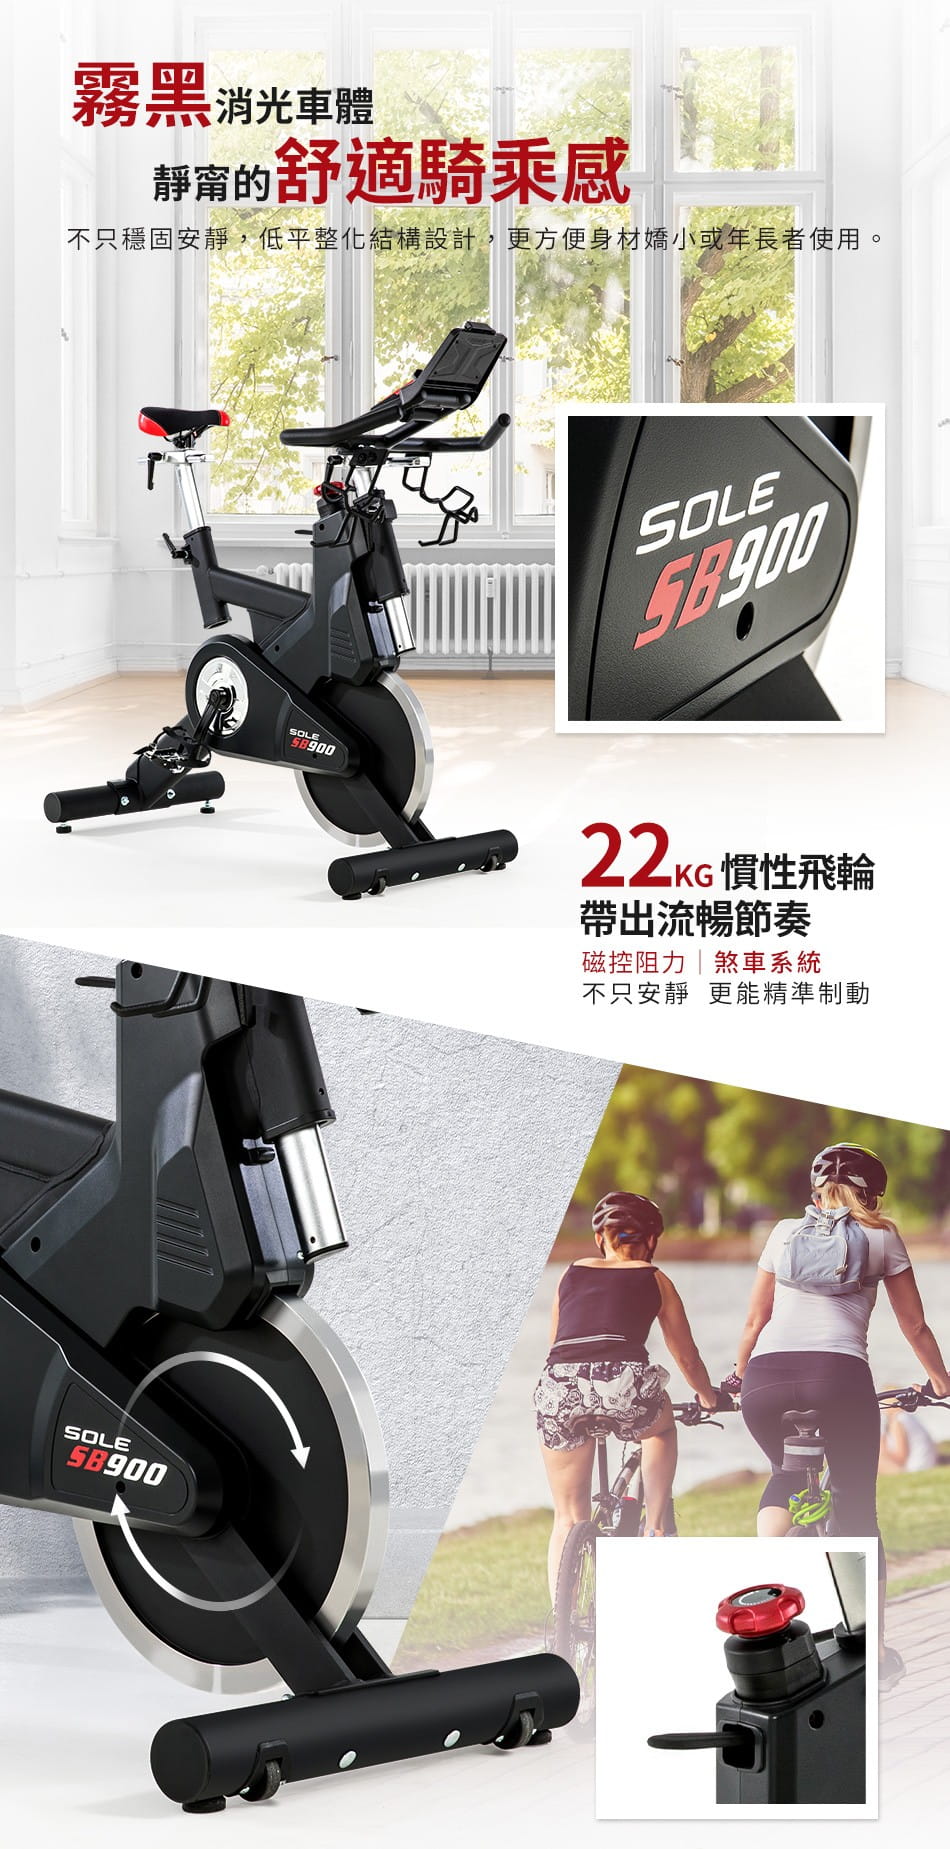 【DYACO】SOLE (索爾) SB900飛輪車 飛輪健身車 室內腳踏車 家用飛輪車 岱宇國際 6